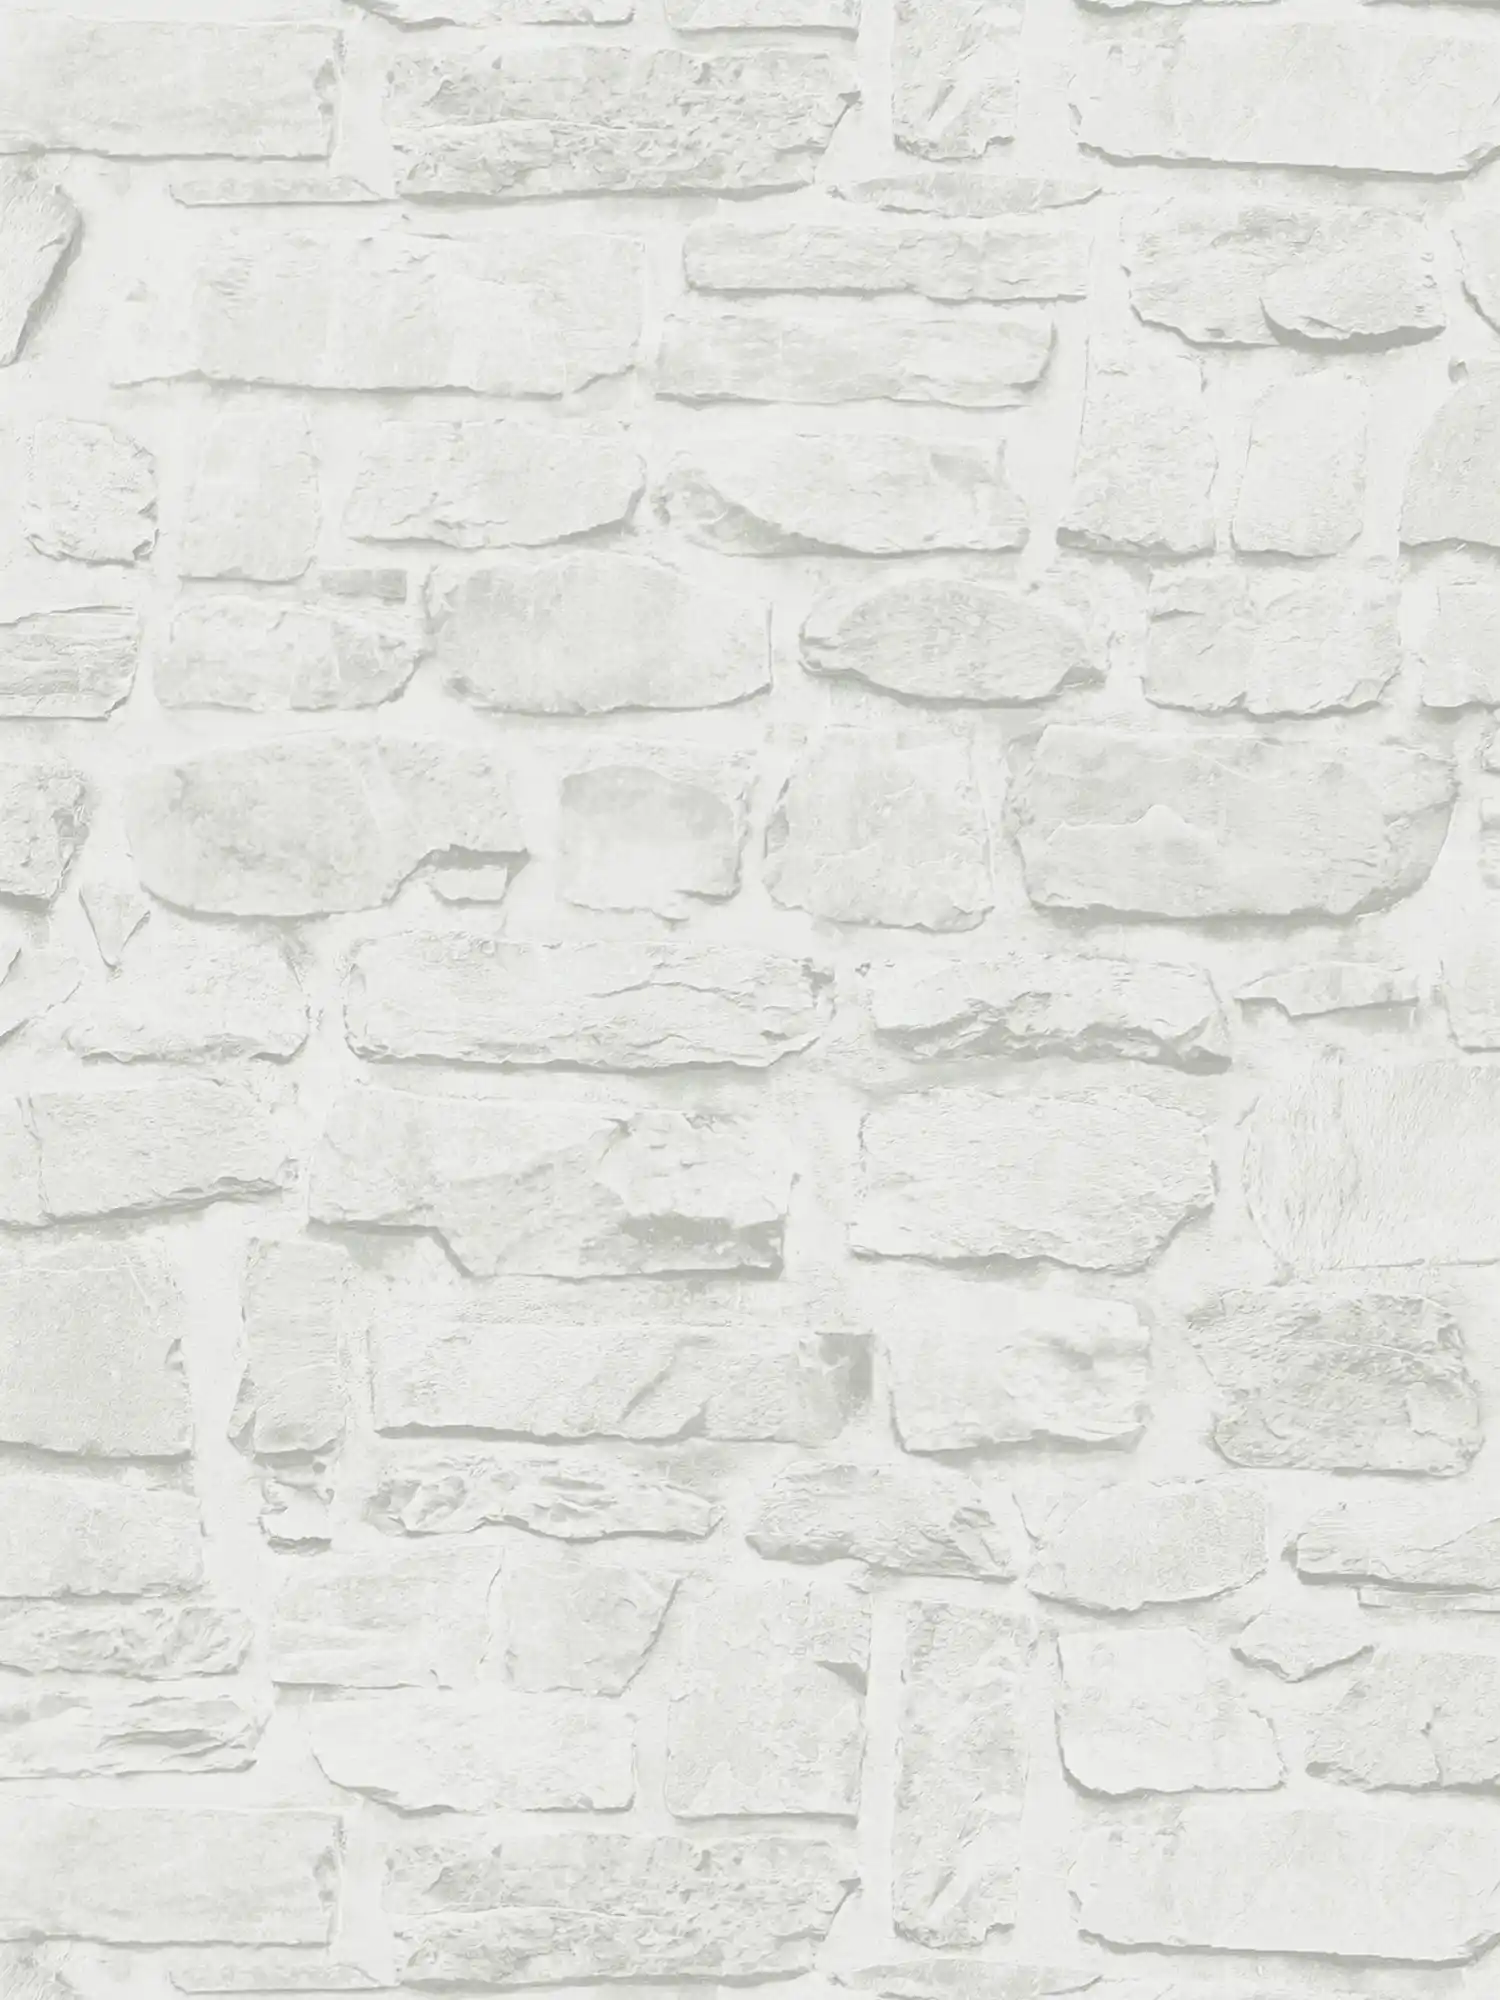 Self-adhesive wallpaper | White stone look with 3D optics - white, grey
